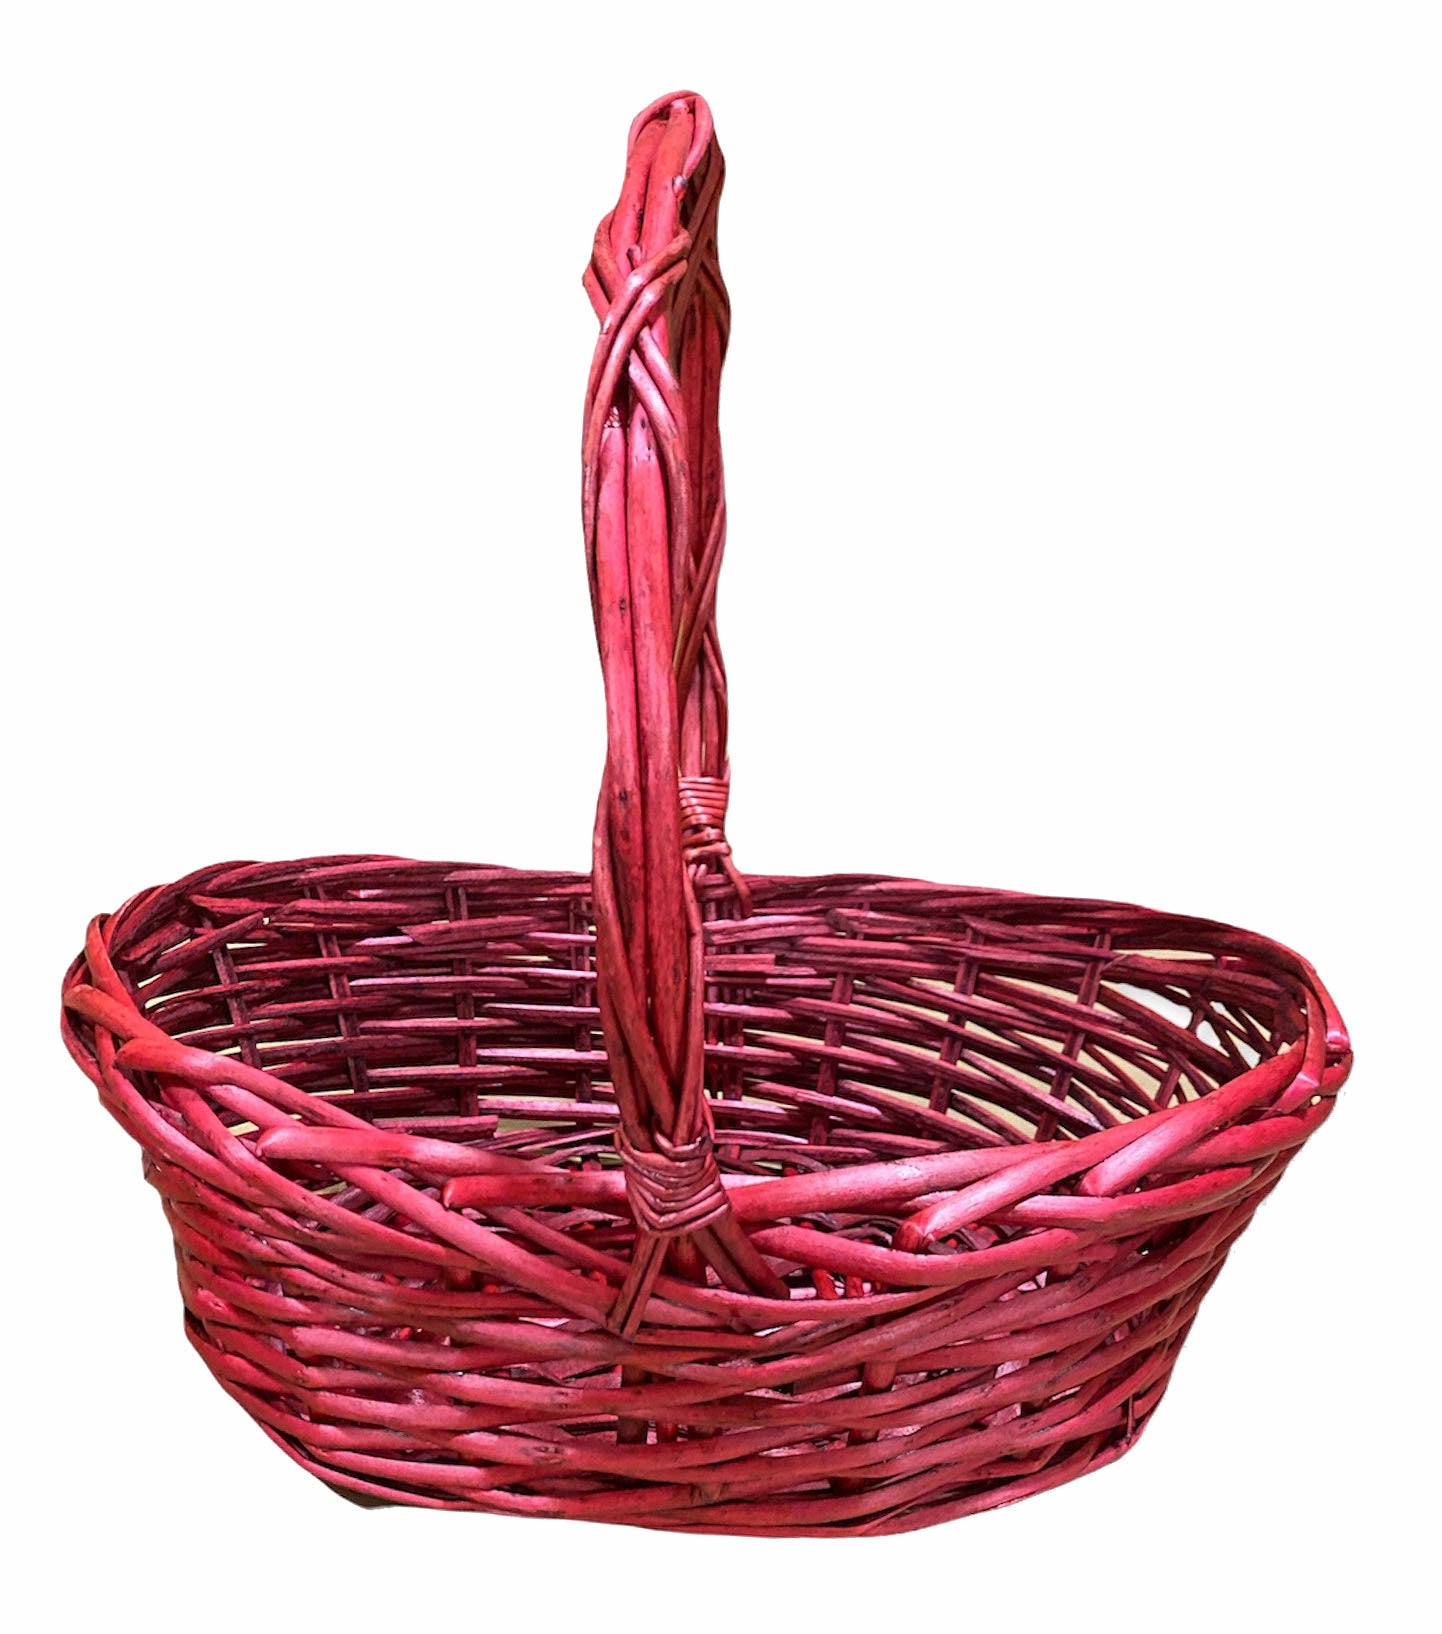 Oval Willow Baskets - Wine - SM - 12 x 9 x 4.5 x 12 inch
(Fits 18 x 24 Cello bag)